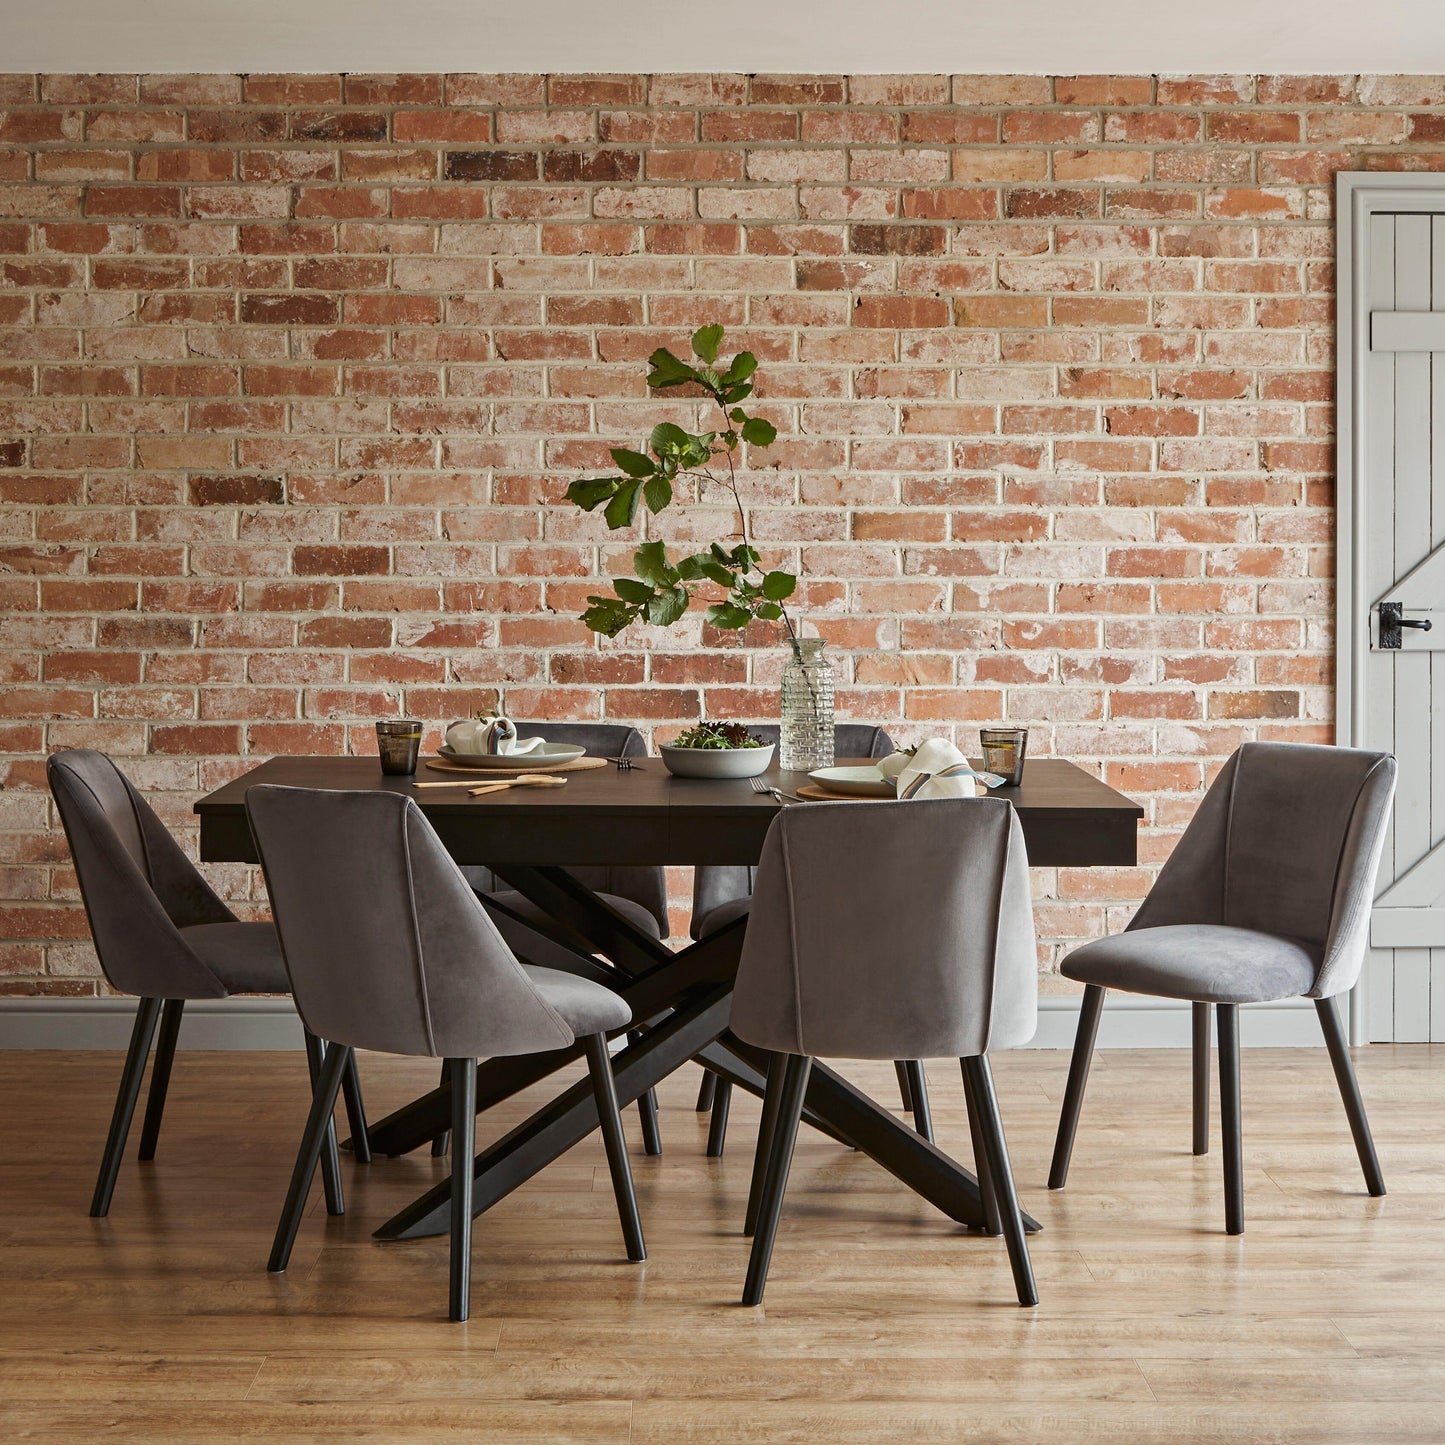 Freya dining chairs - set of 2 - grey velvet and black